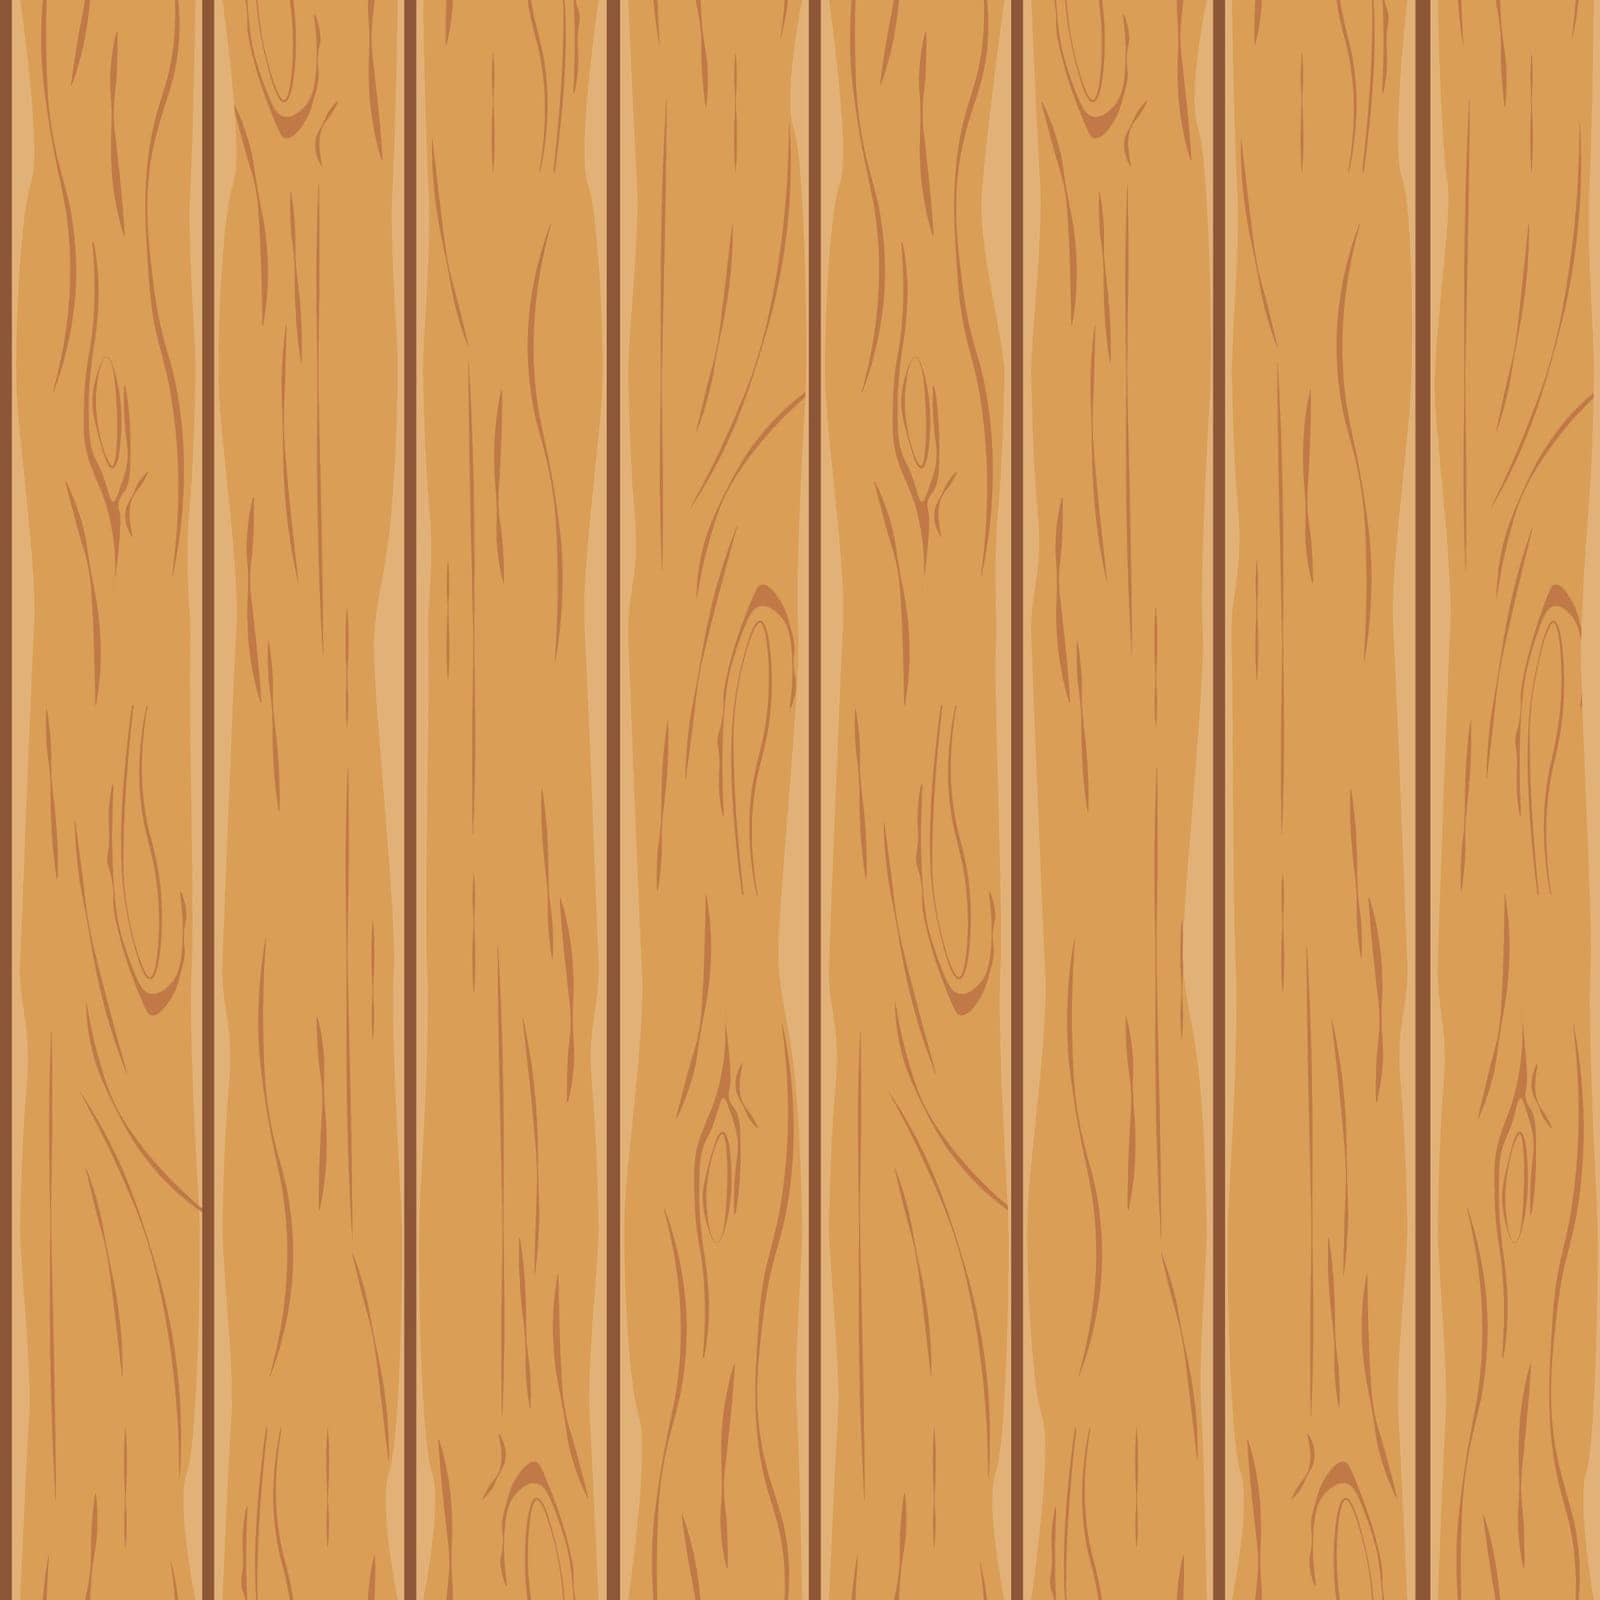 Wooden board pattern. Seamless pattern in the form of vertical wooden boards. Wooden pattern. Vector illustration.